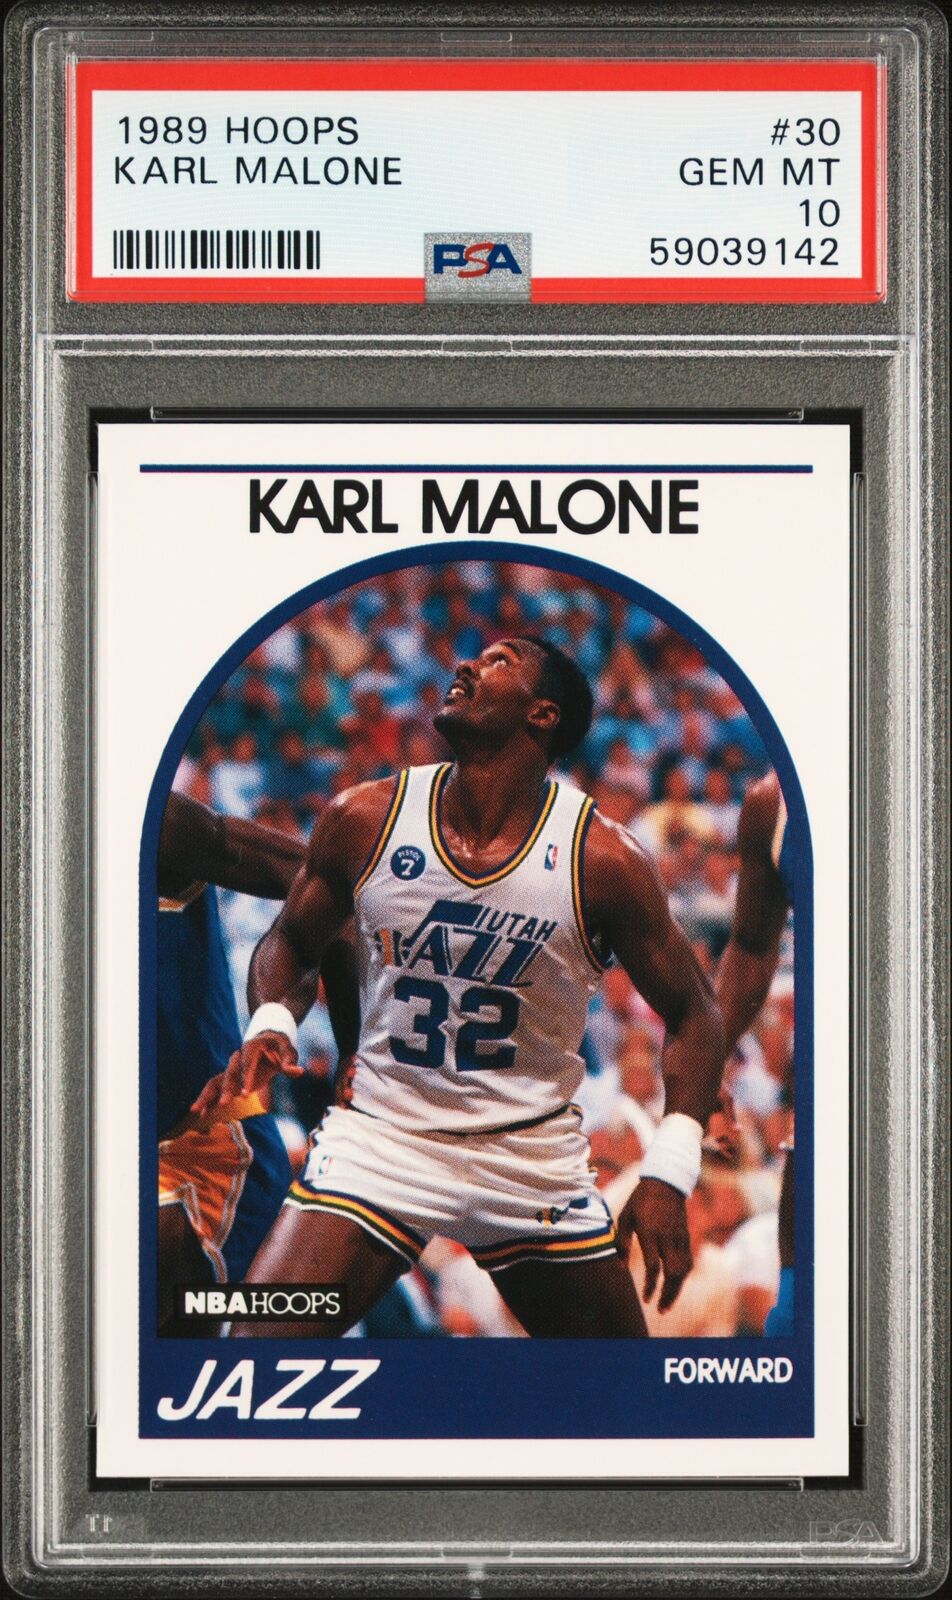 1989 Hoops 30 Karl Malone PSA 10 59039142